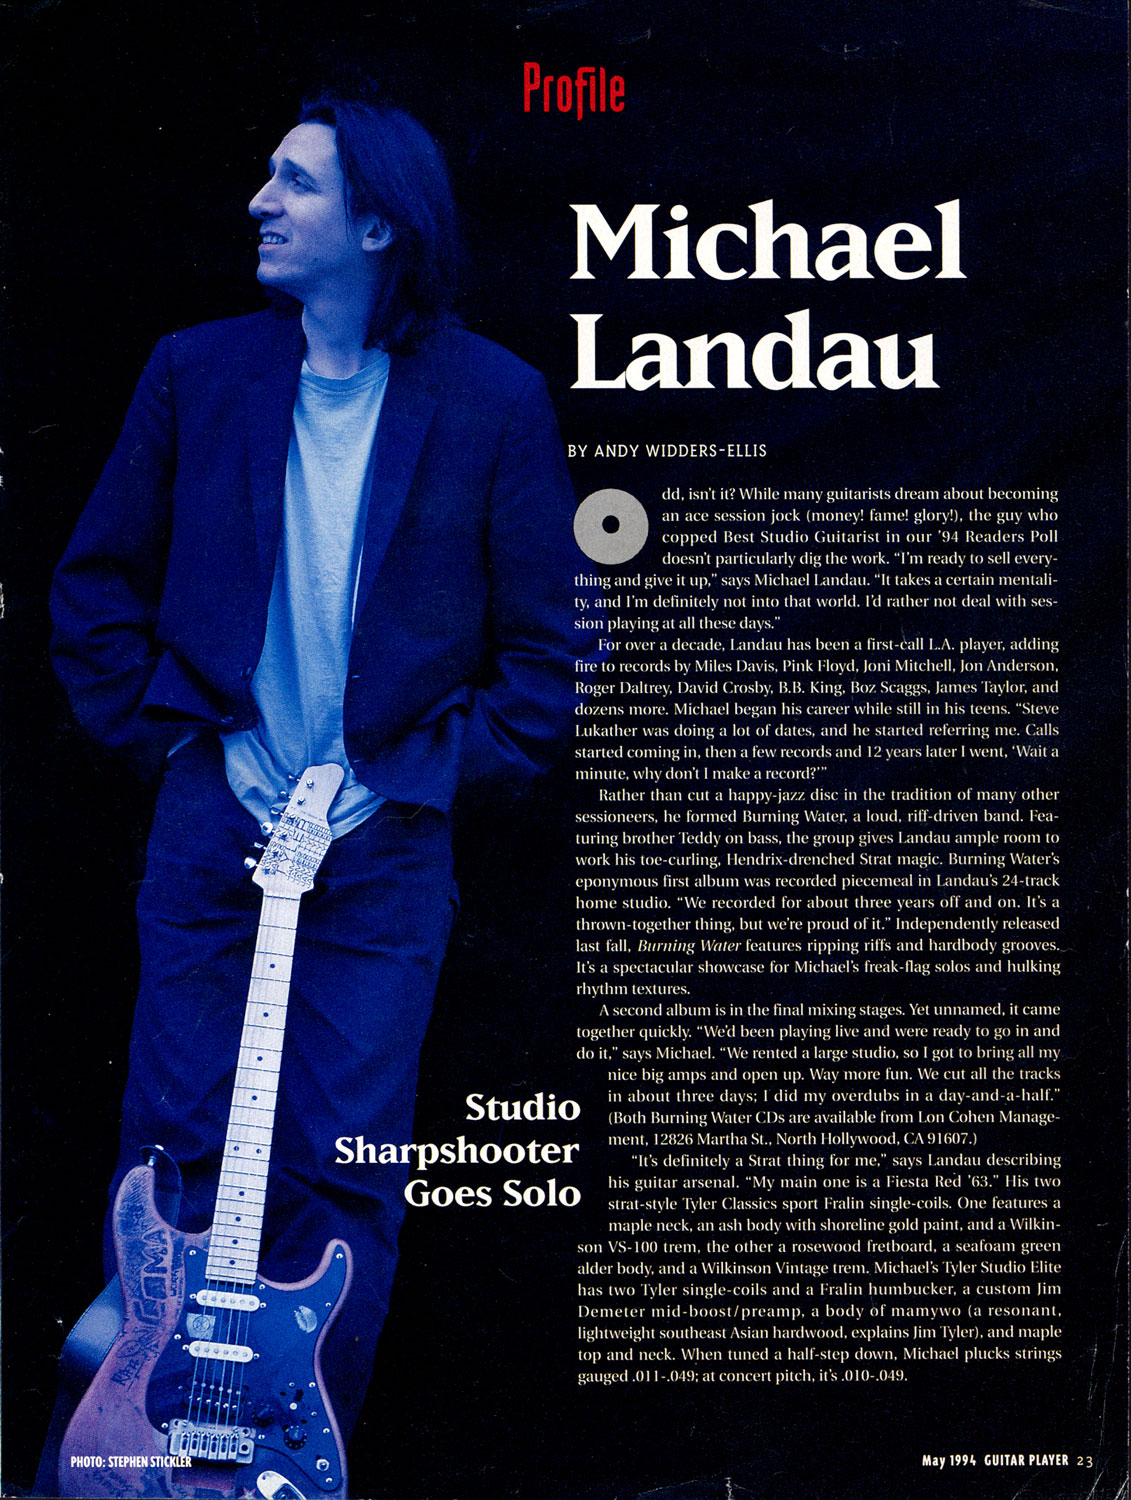 Copy of 1994 Guitar Player